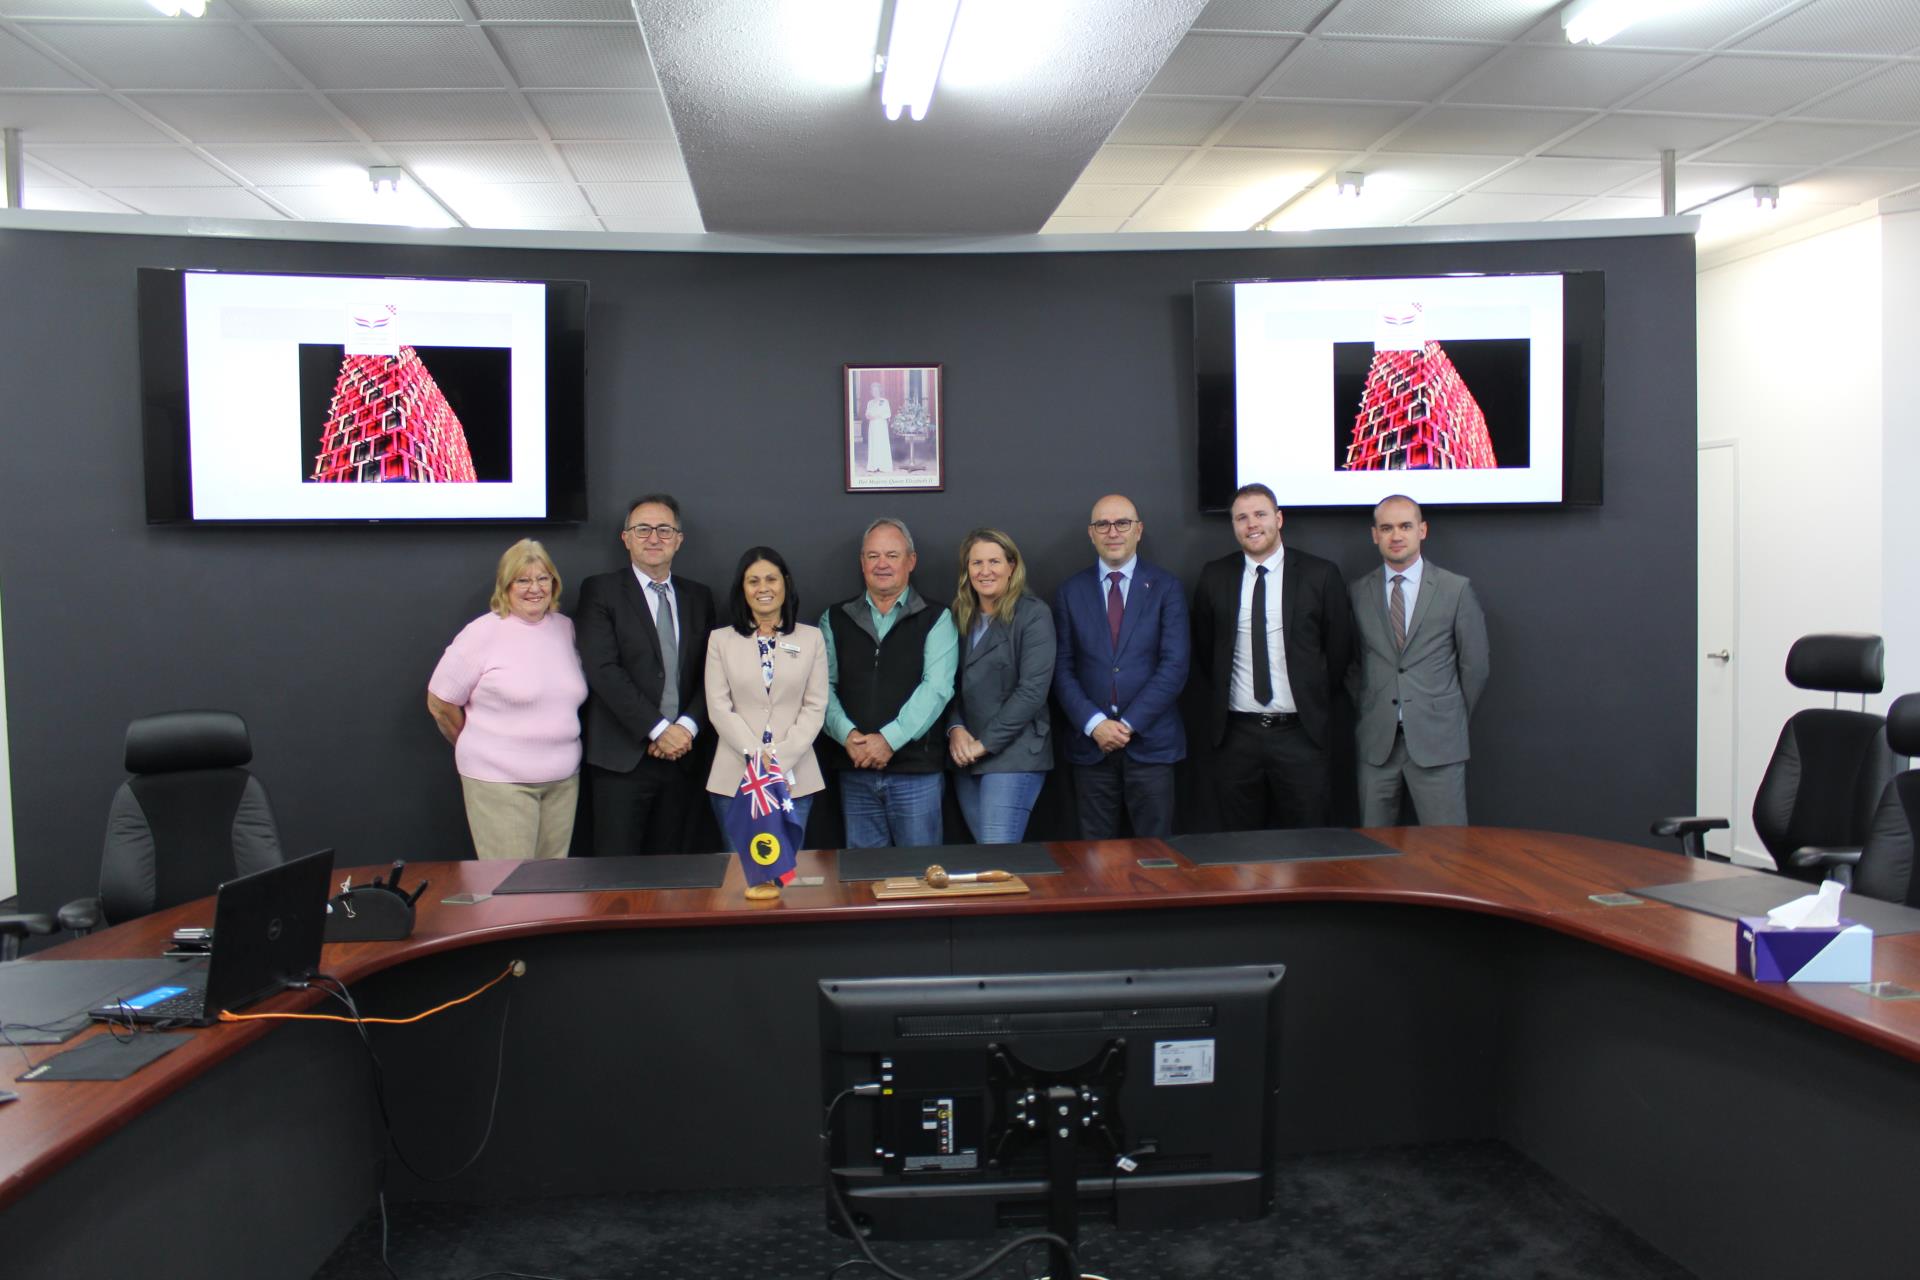 Carnarvon Invites Sister City Partnership with Antunovac, Croatia